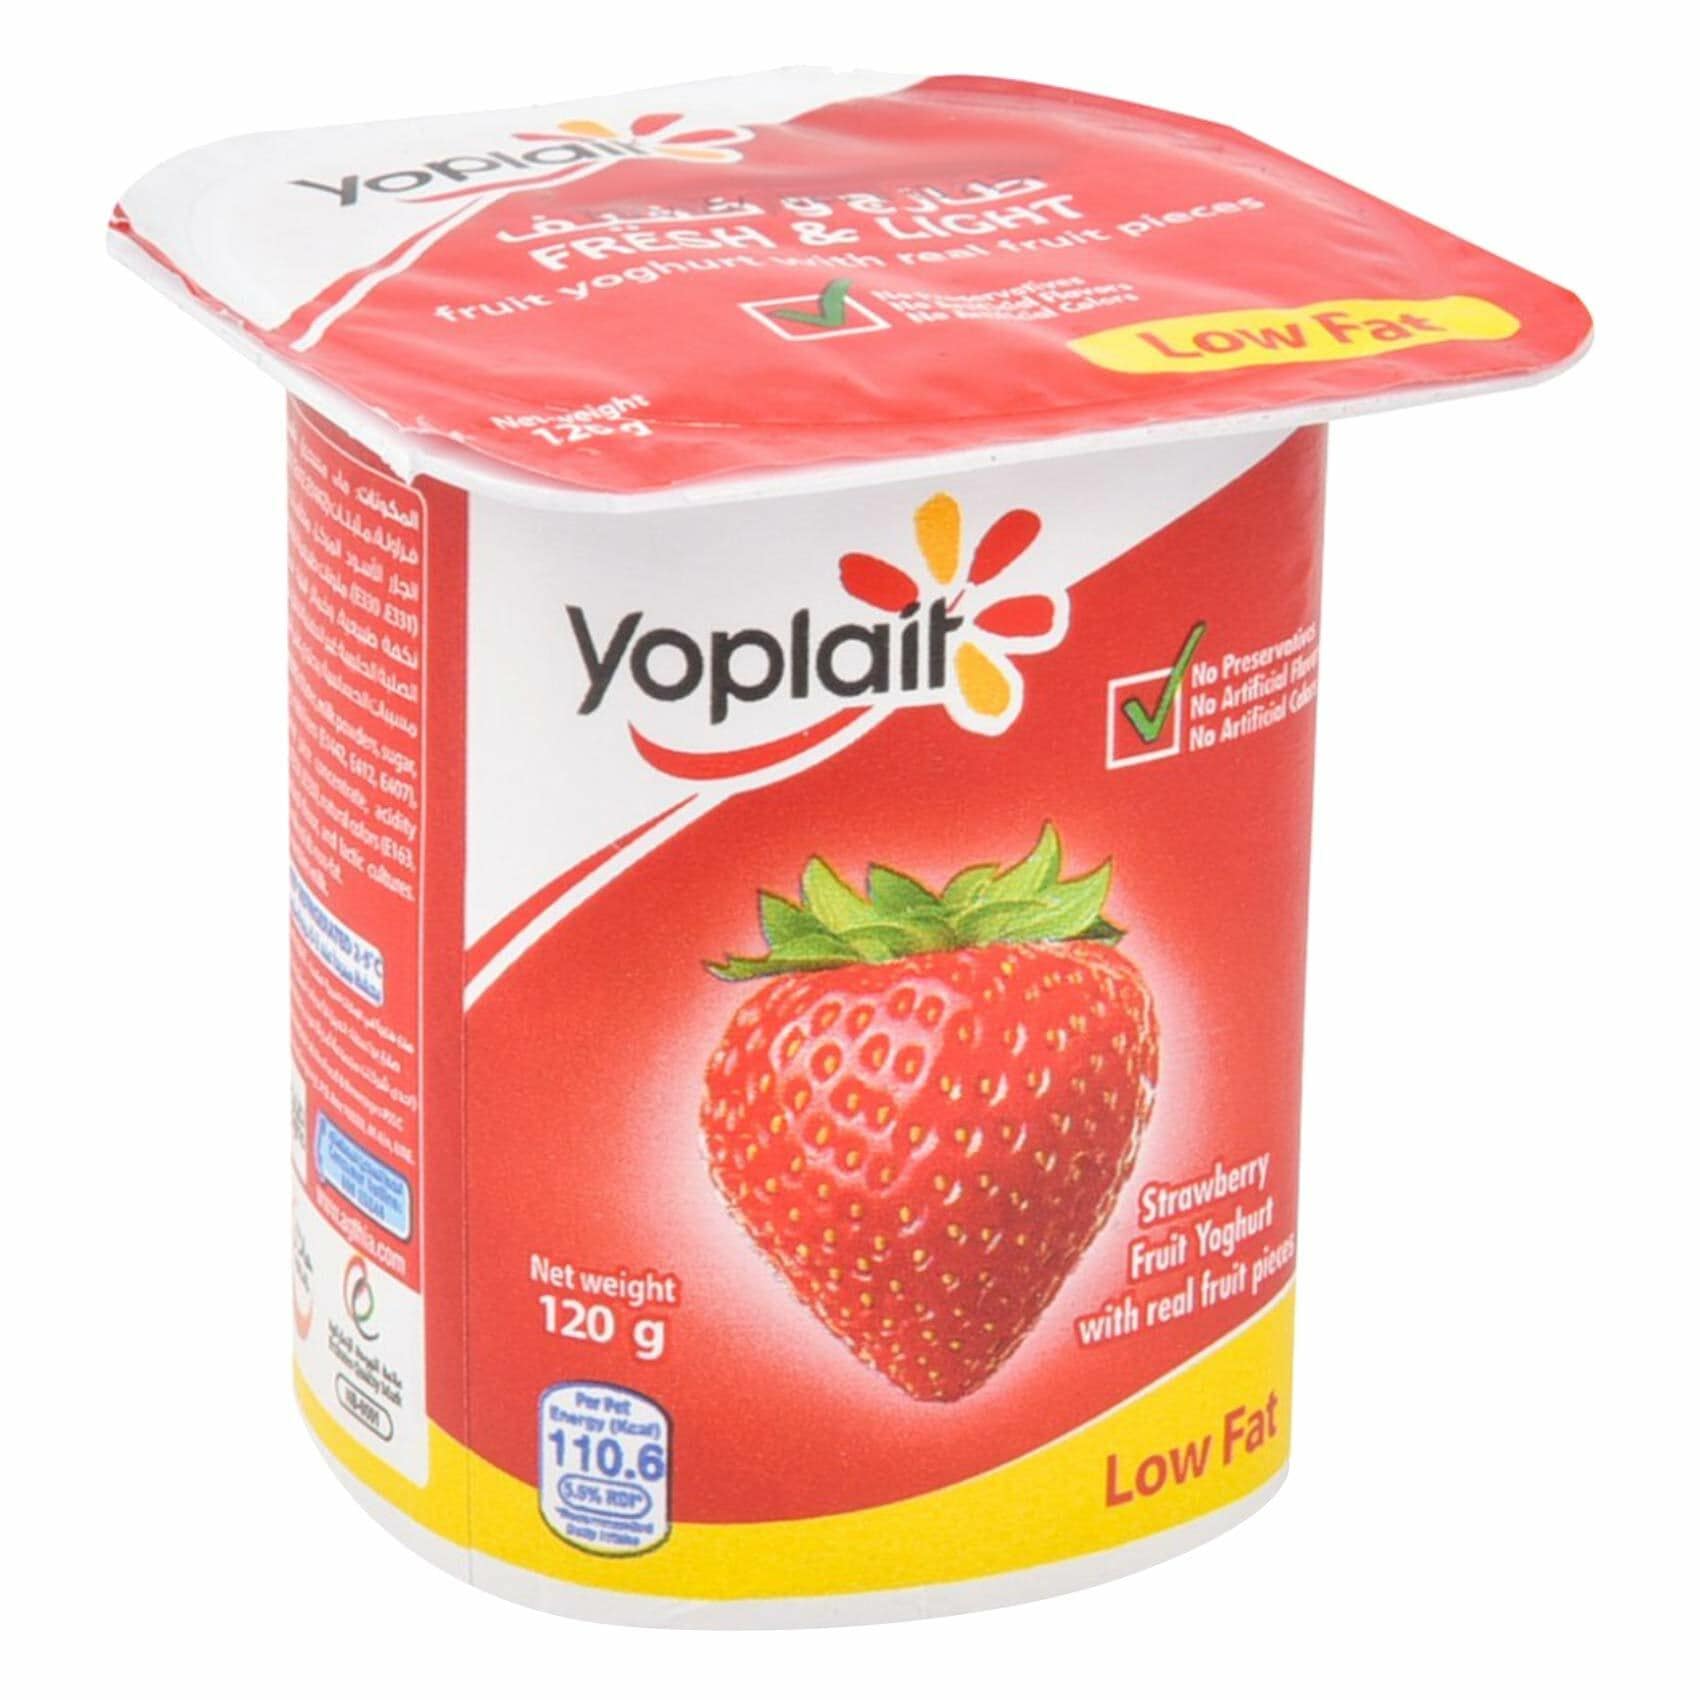 33 Yoplait Yogurt Food Label Labels 2021